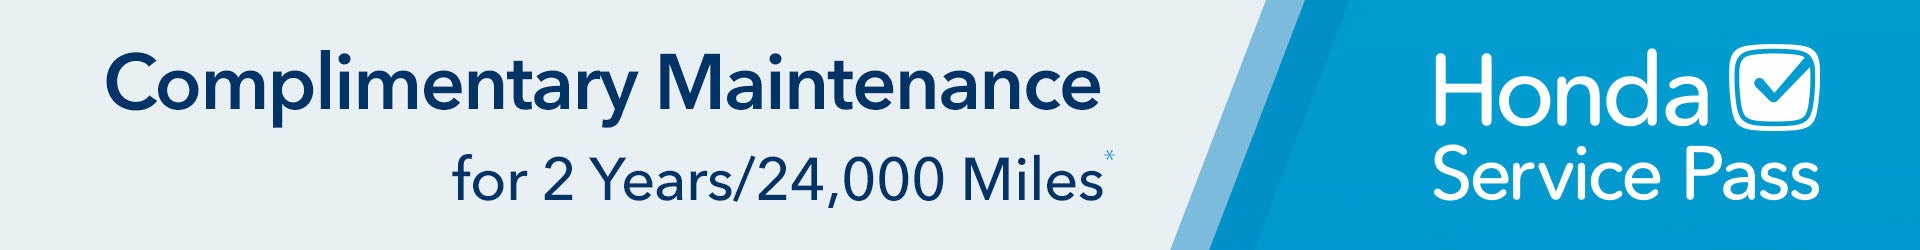 Complimentary Maintenance for 2 years / 24,000 Miles Honda Service Pass | Lumberton Honda in Lumberton NC